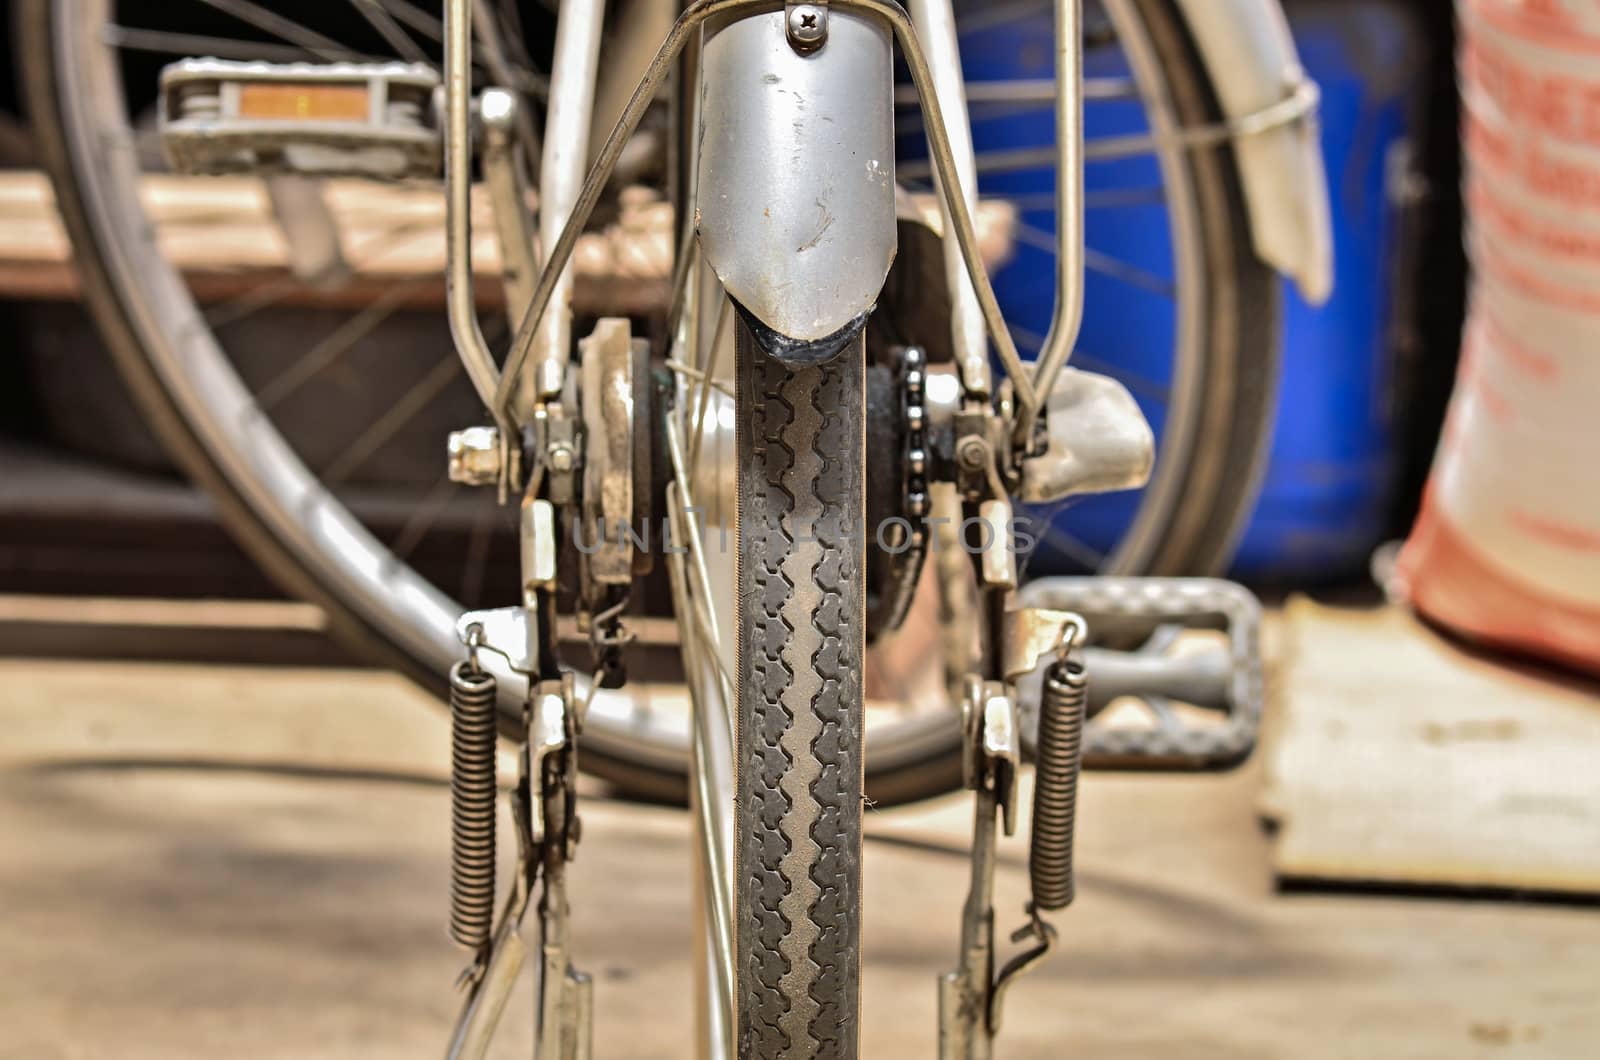 bicycle rear wheel